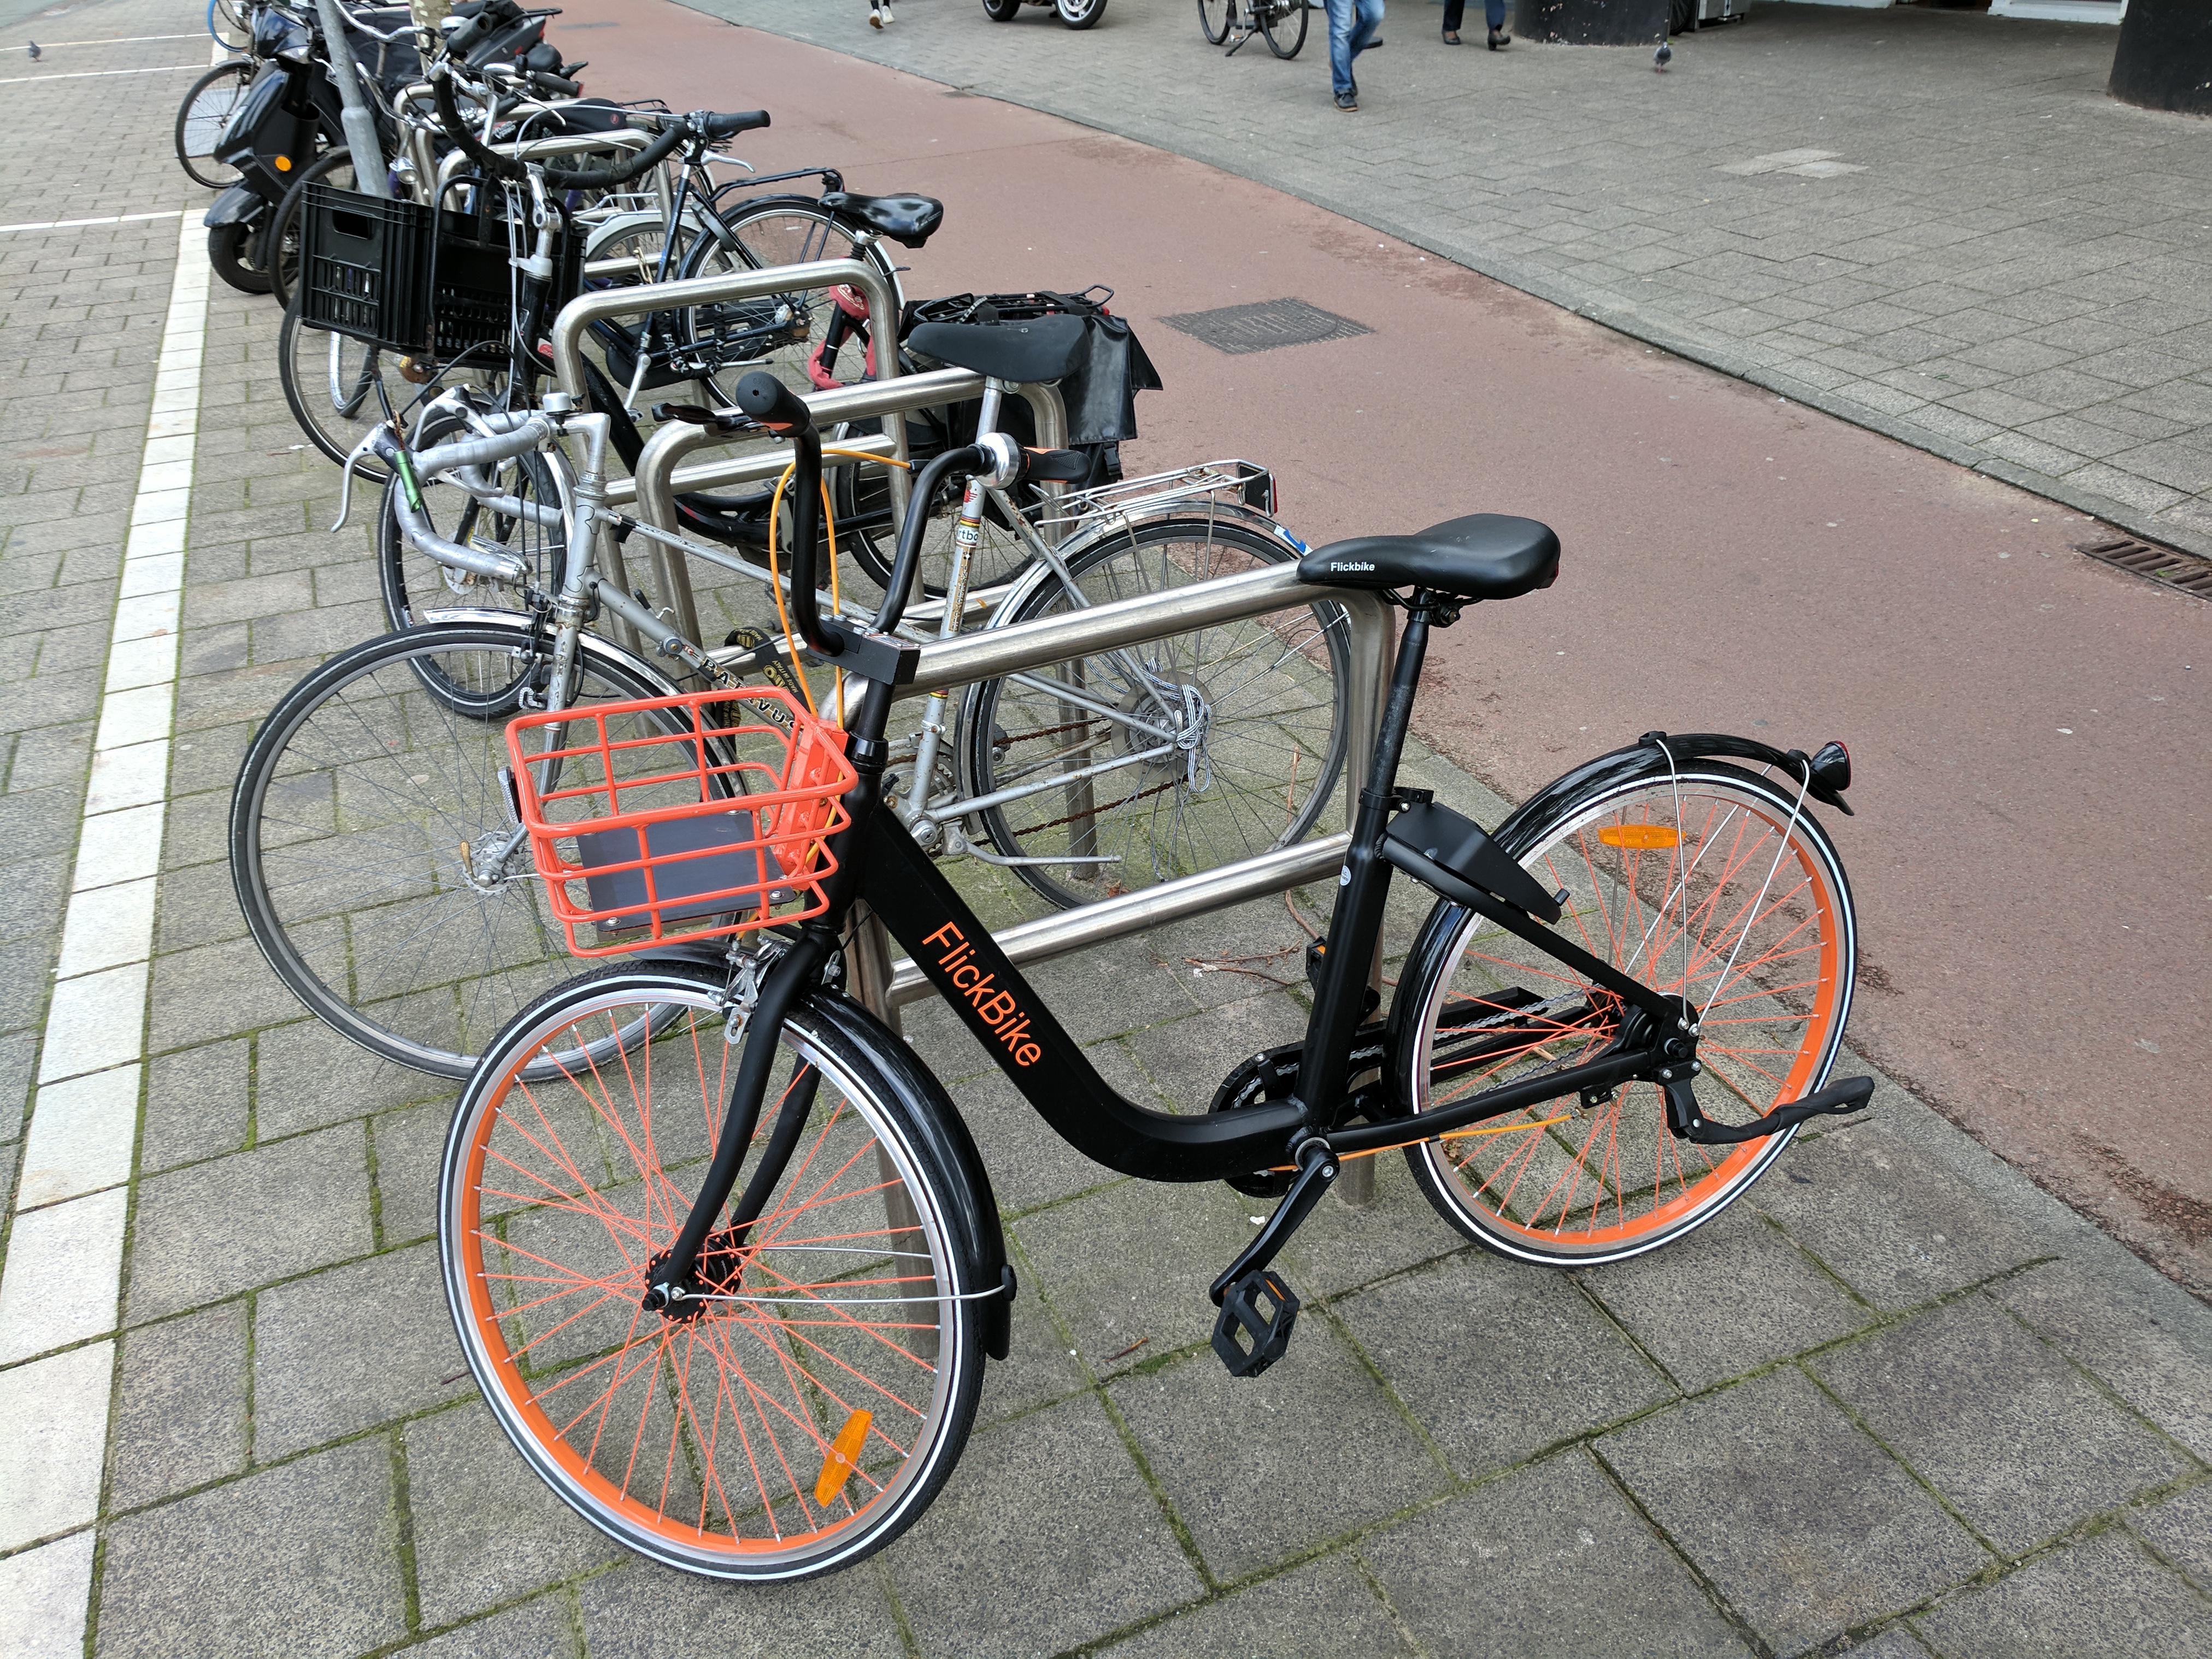 A FlickBike rental bike tied to a bike loop next to the bikeway.